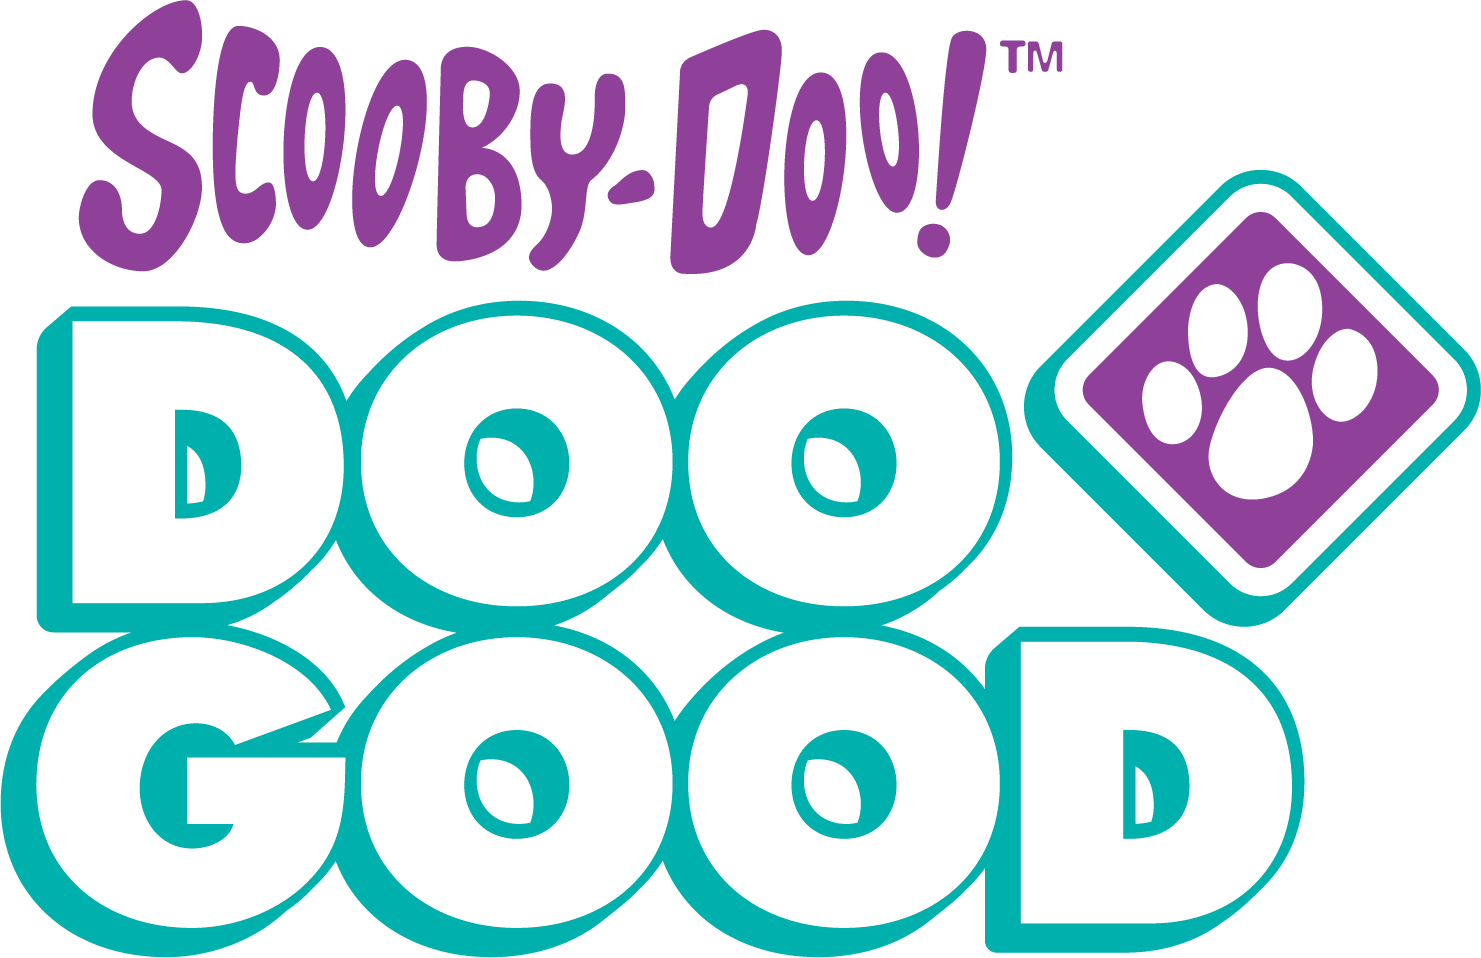 scooby doo doo good event MOA